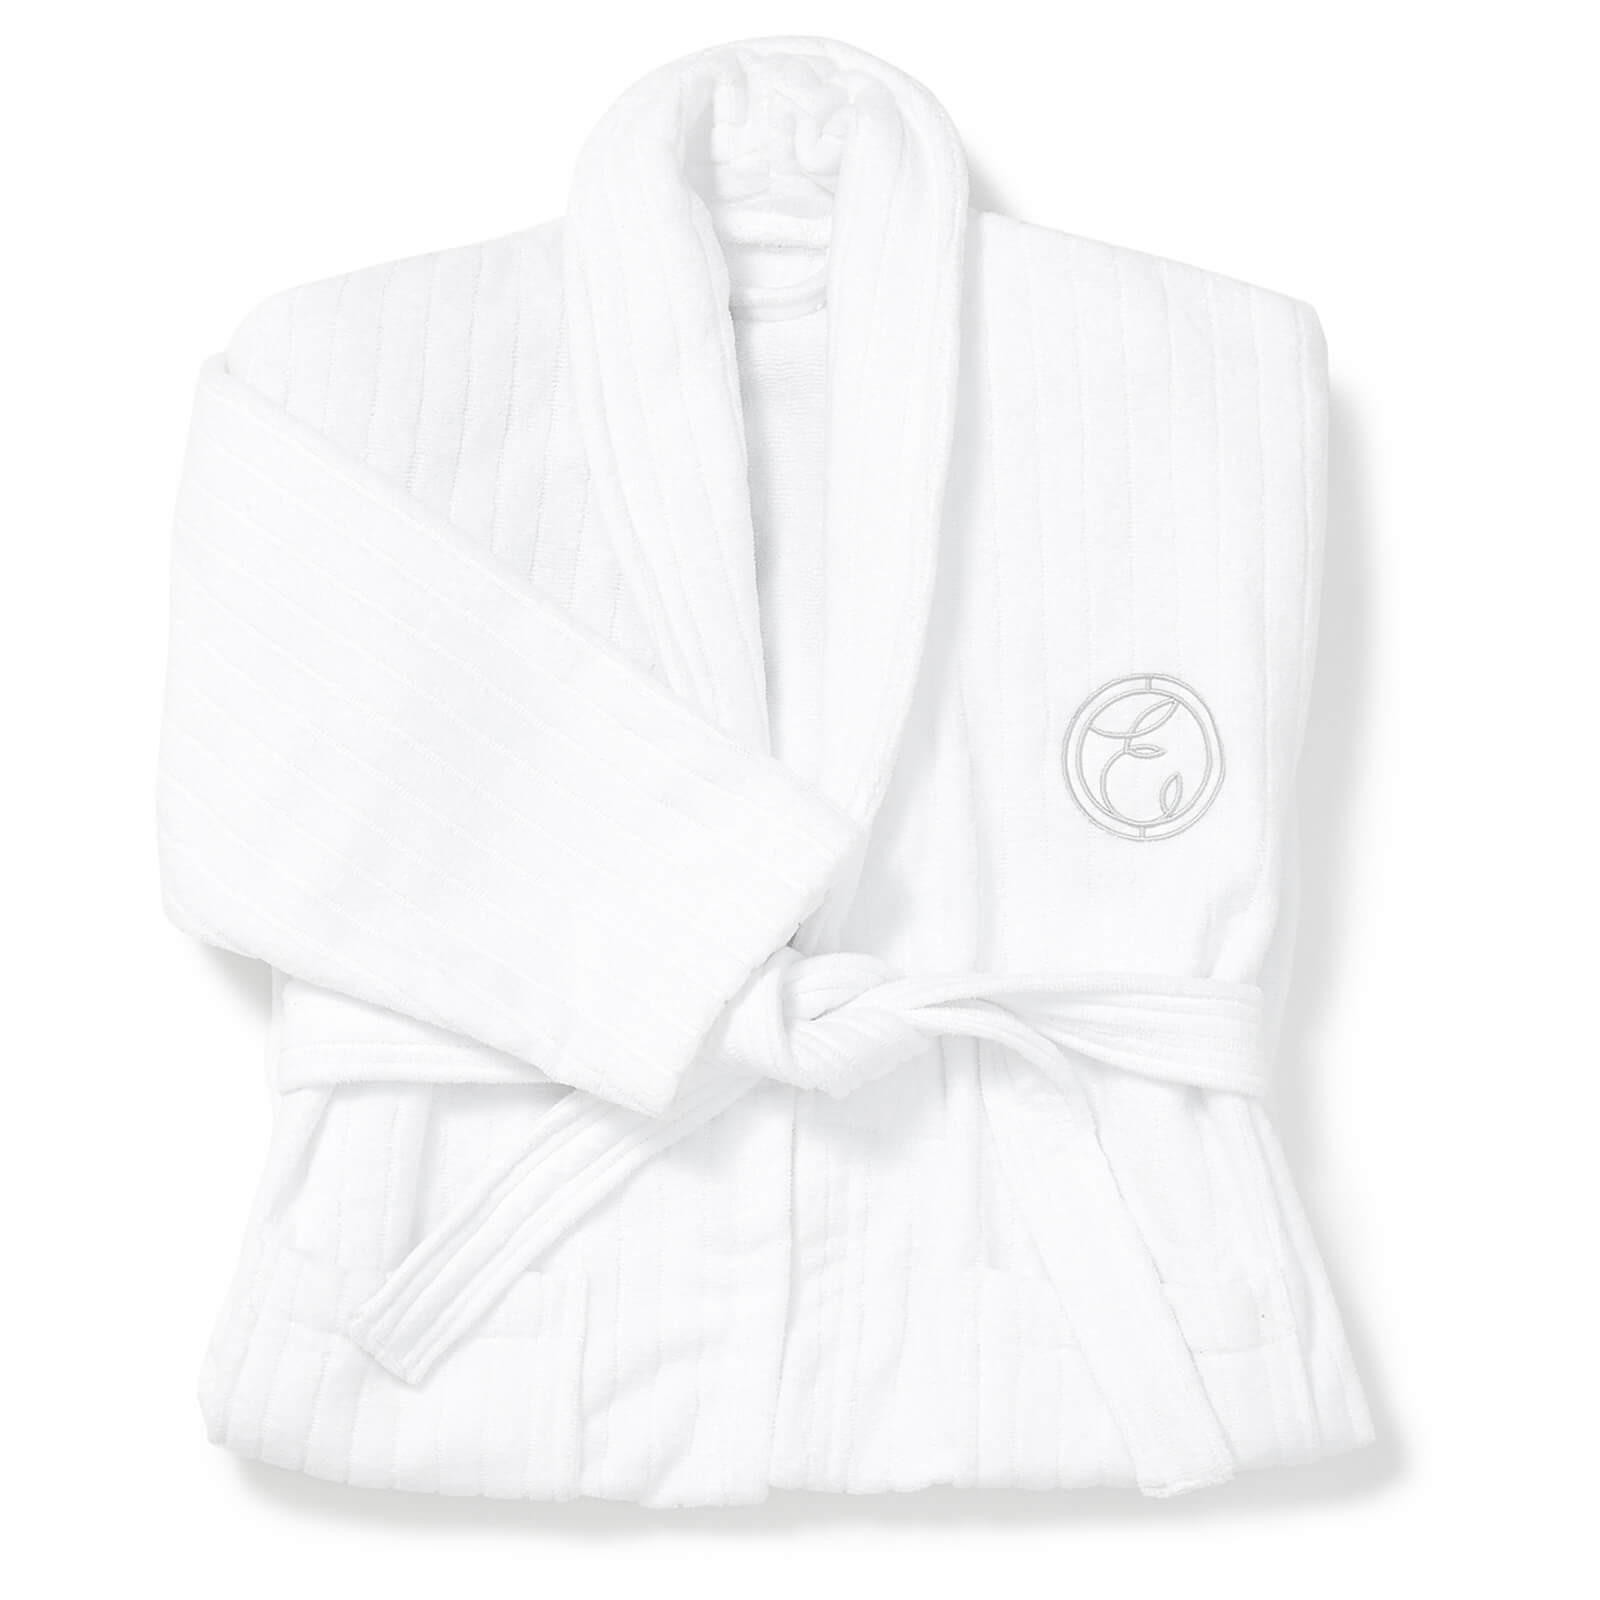 Image of ESPA Cotton Embroidered Bath Robe - M